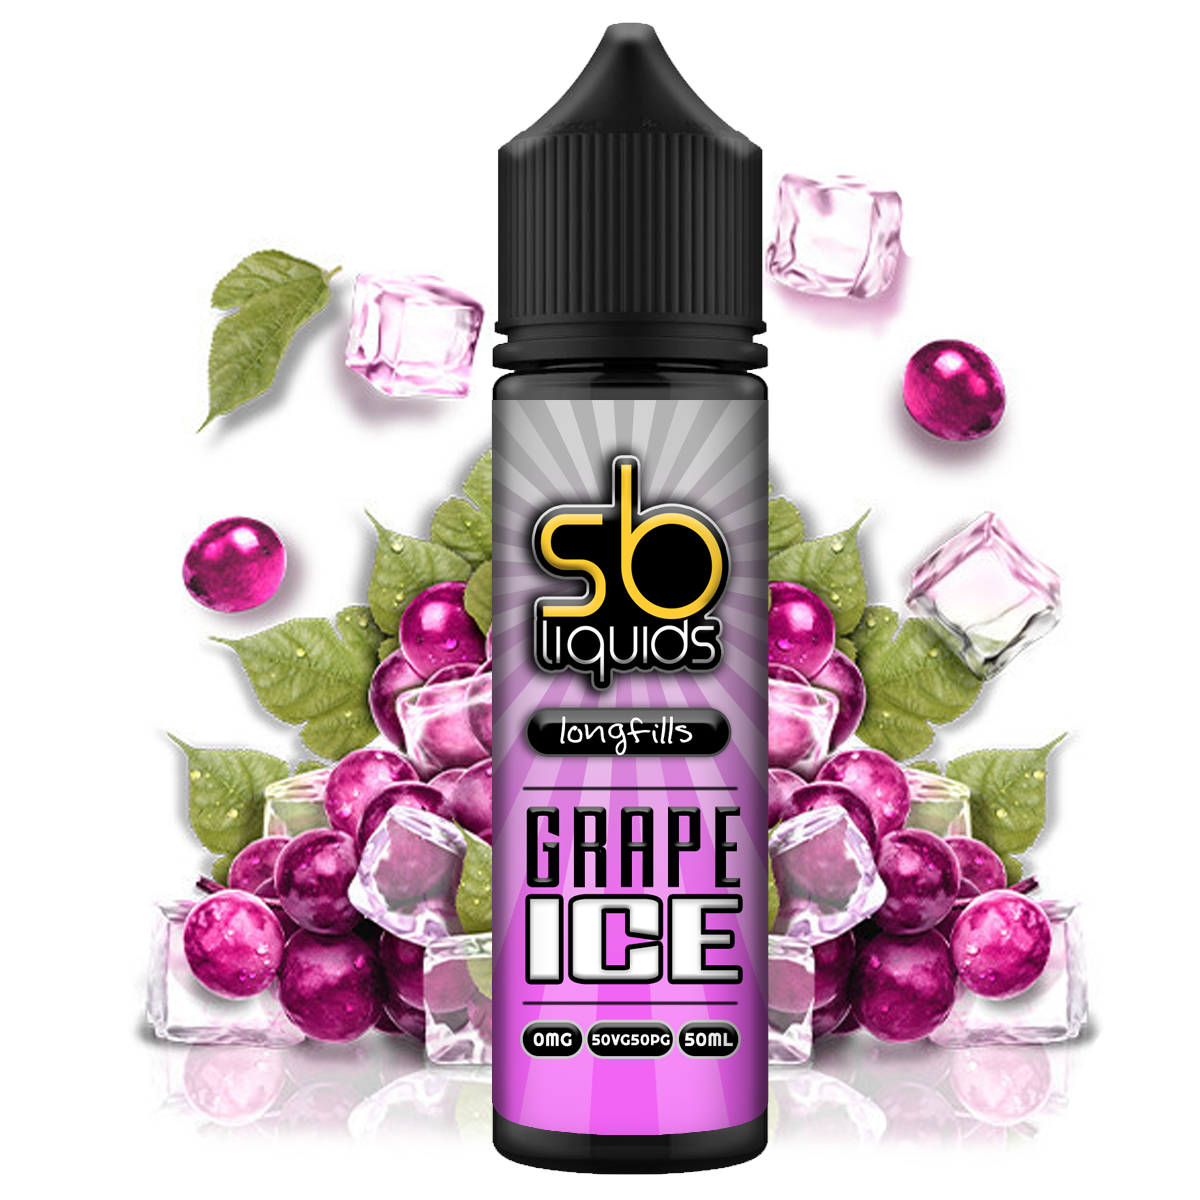 SB Liquids - Grape Ice Longfill